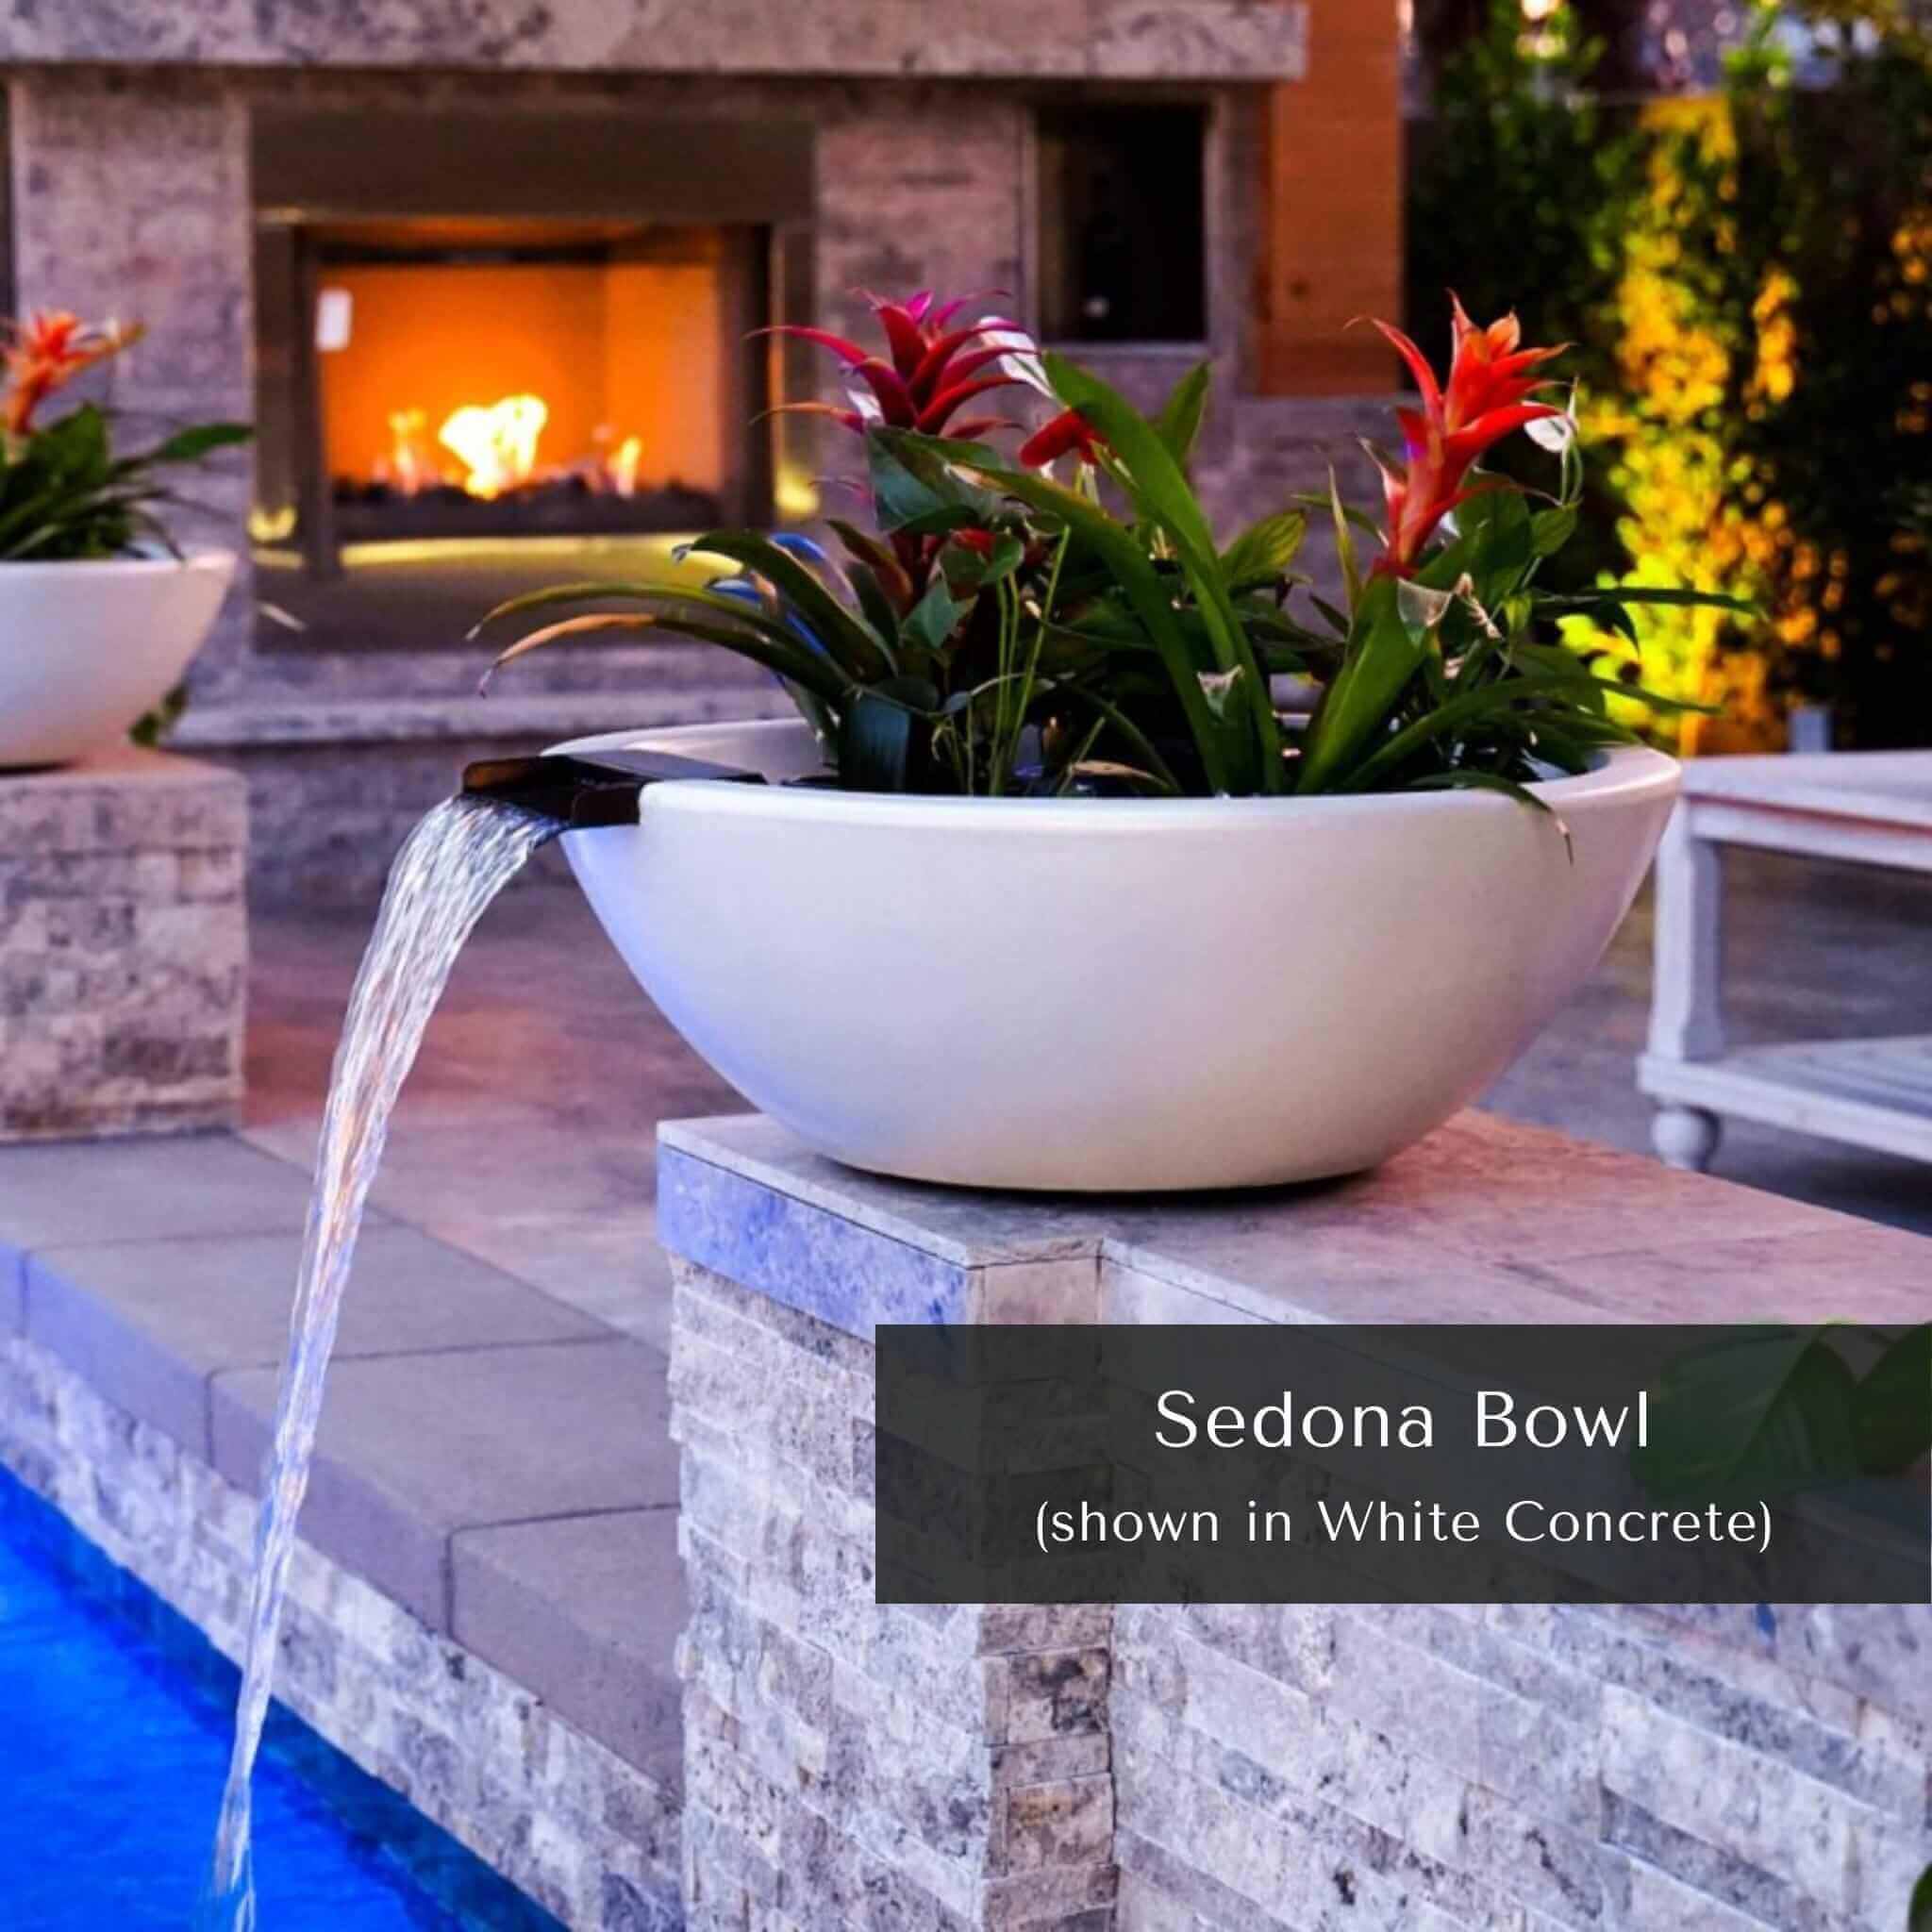 "Sedona" Copper Planter & Water Bowl - The Outdoor Plus